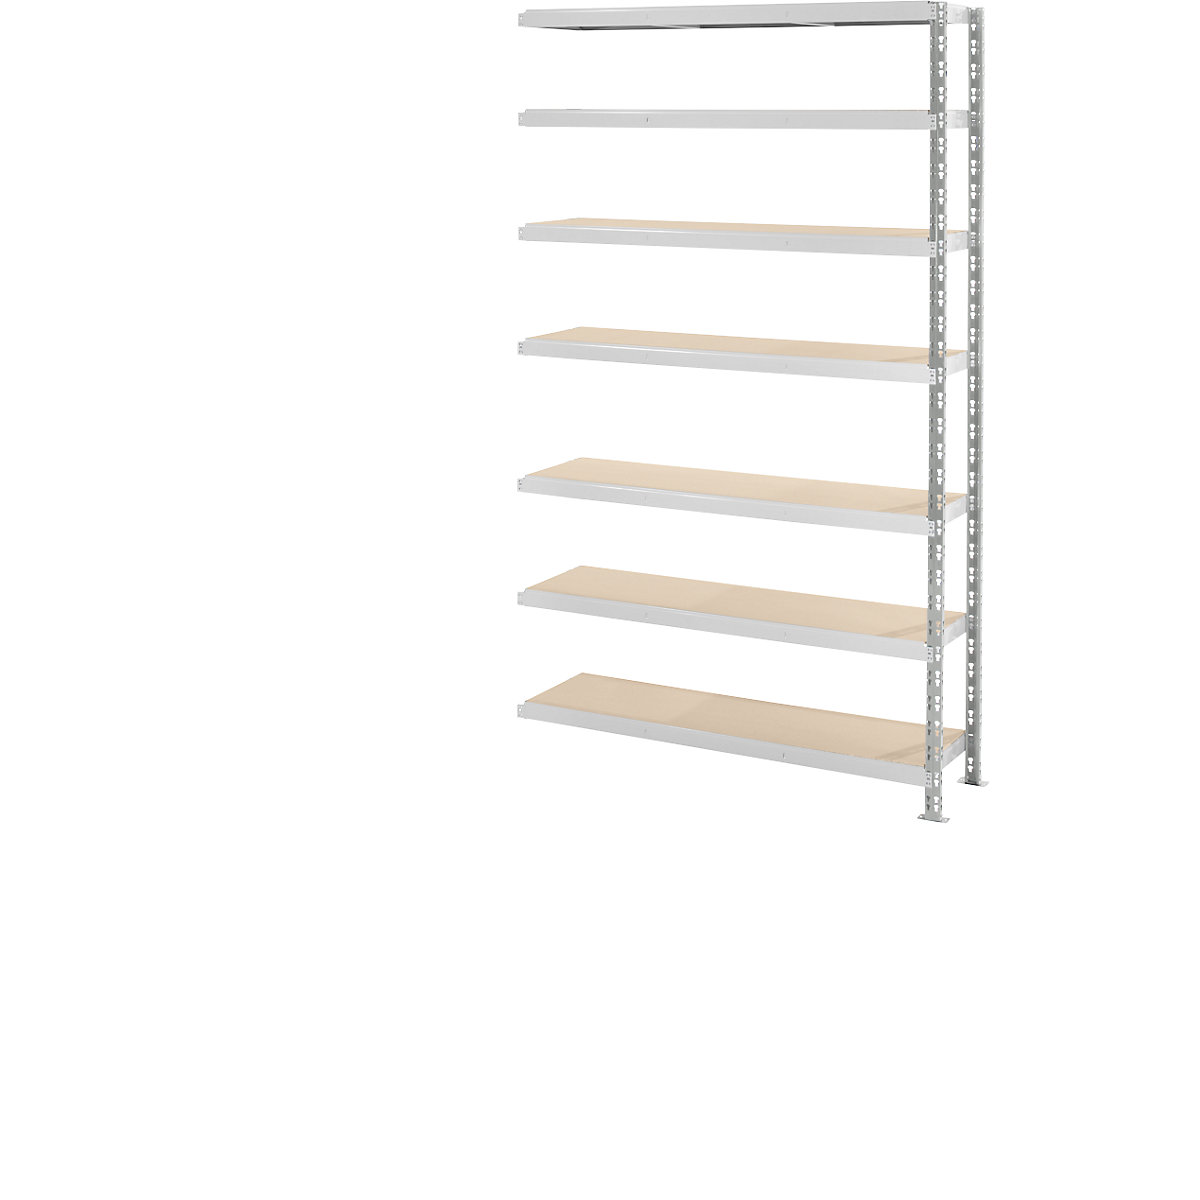 Wide span boltless shelf unit with moulded chipboard shelves, depth 400 mm, extension shelf unit, HxW 2522 x 1525 mm